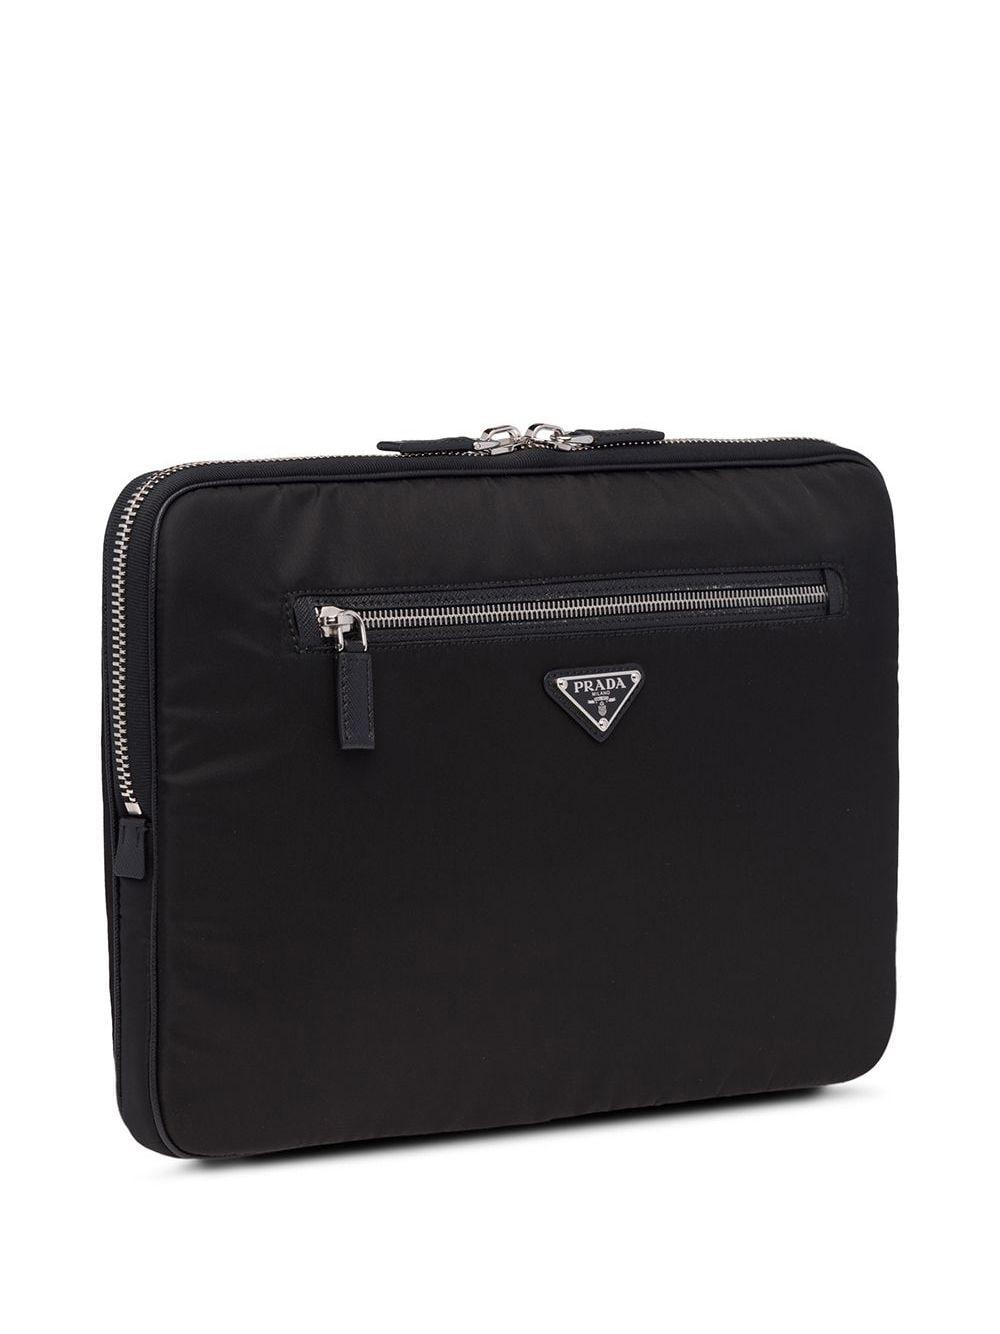 Prada Leather Saffiano Laptop Case in 